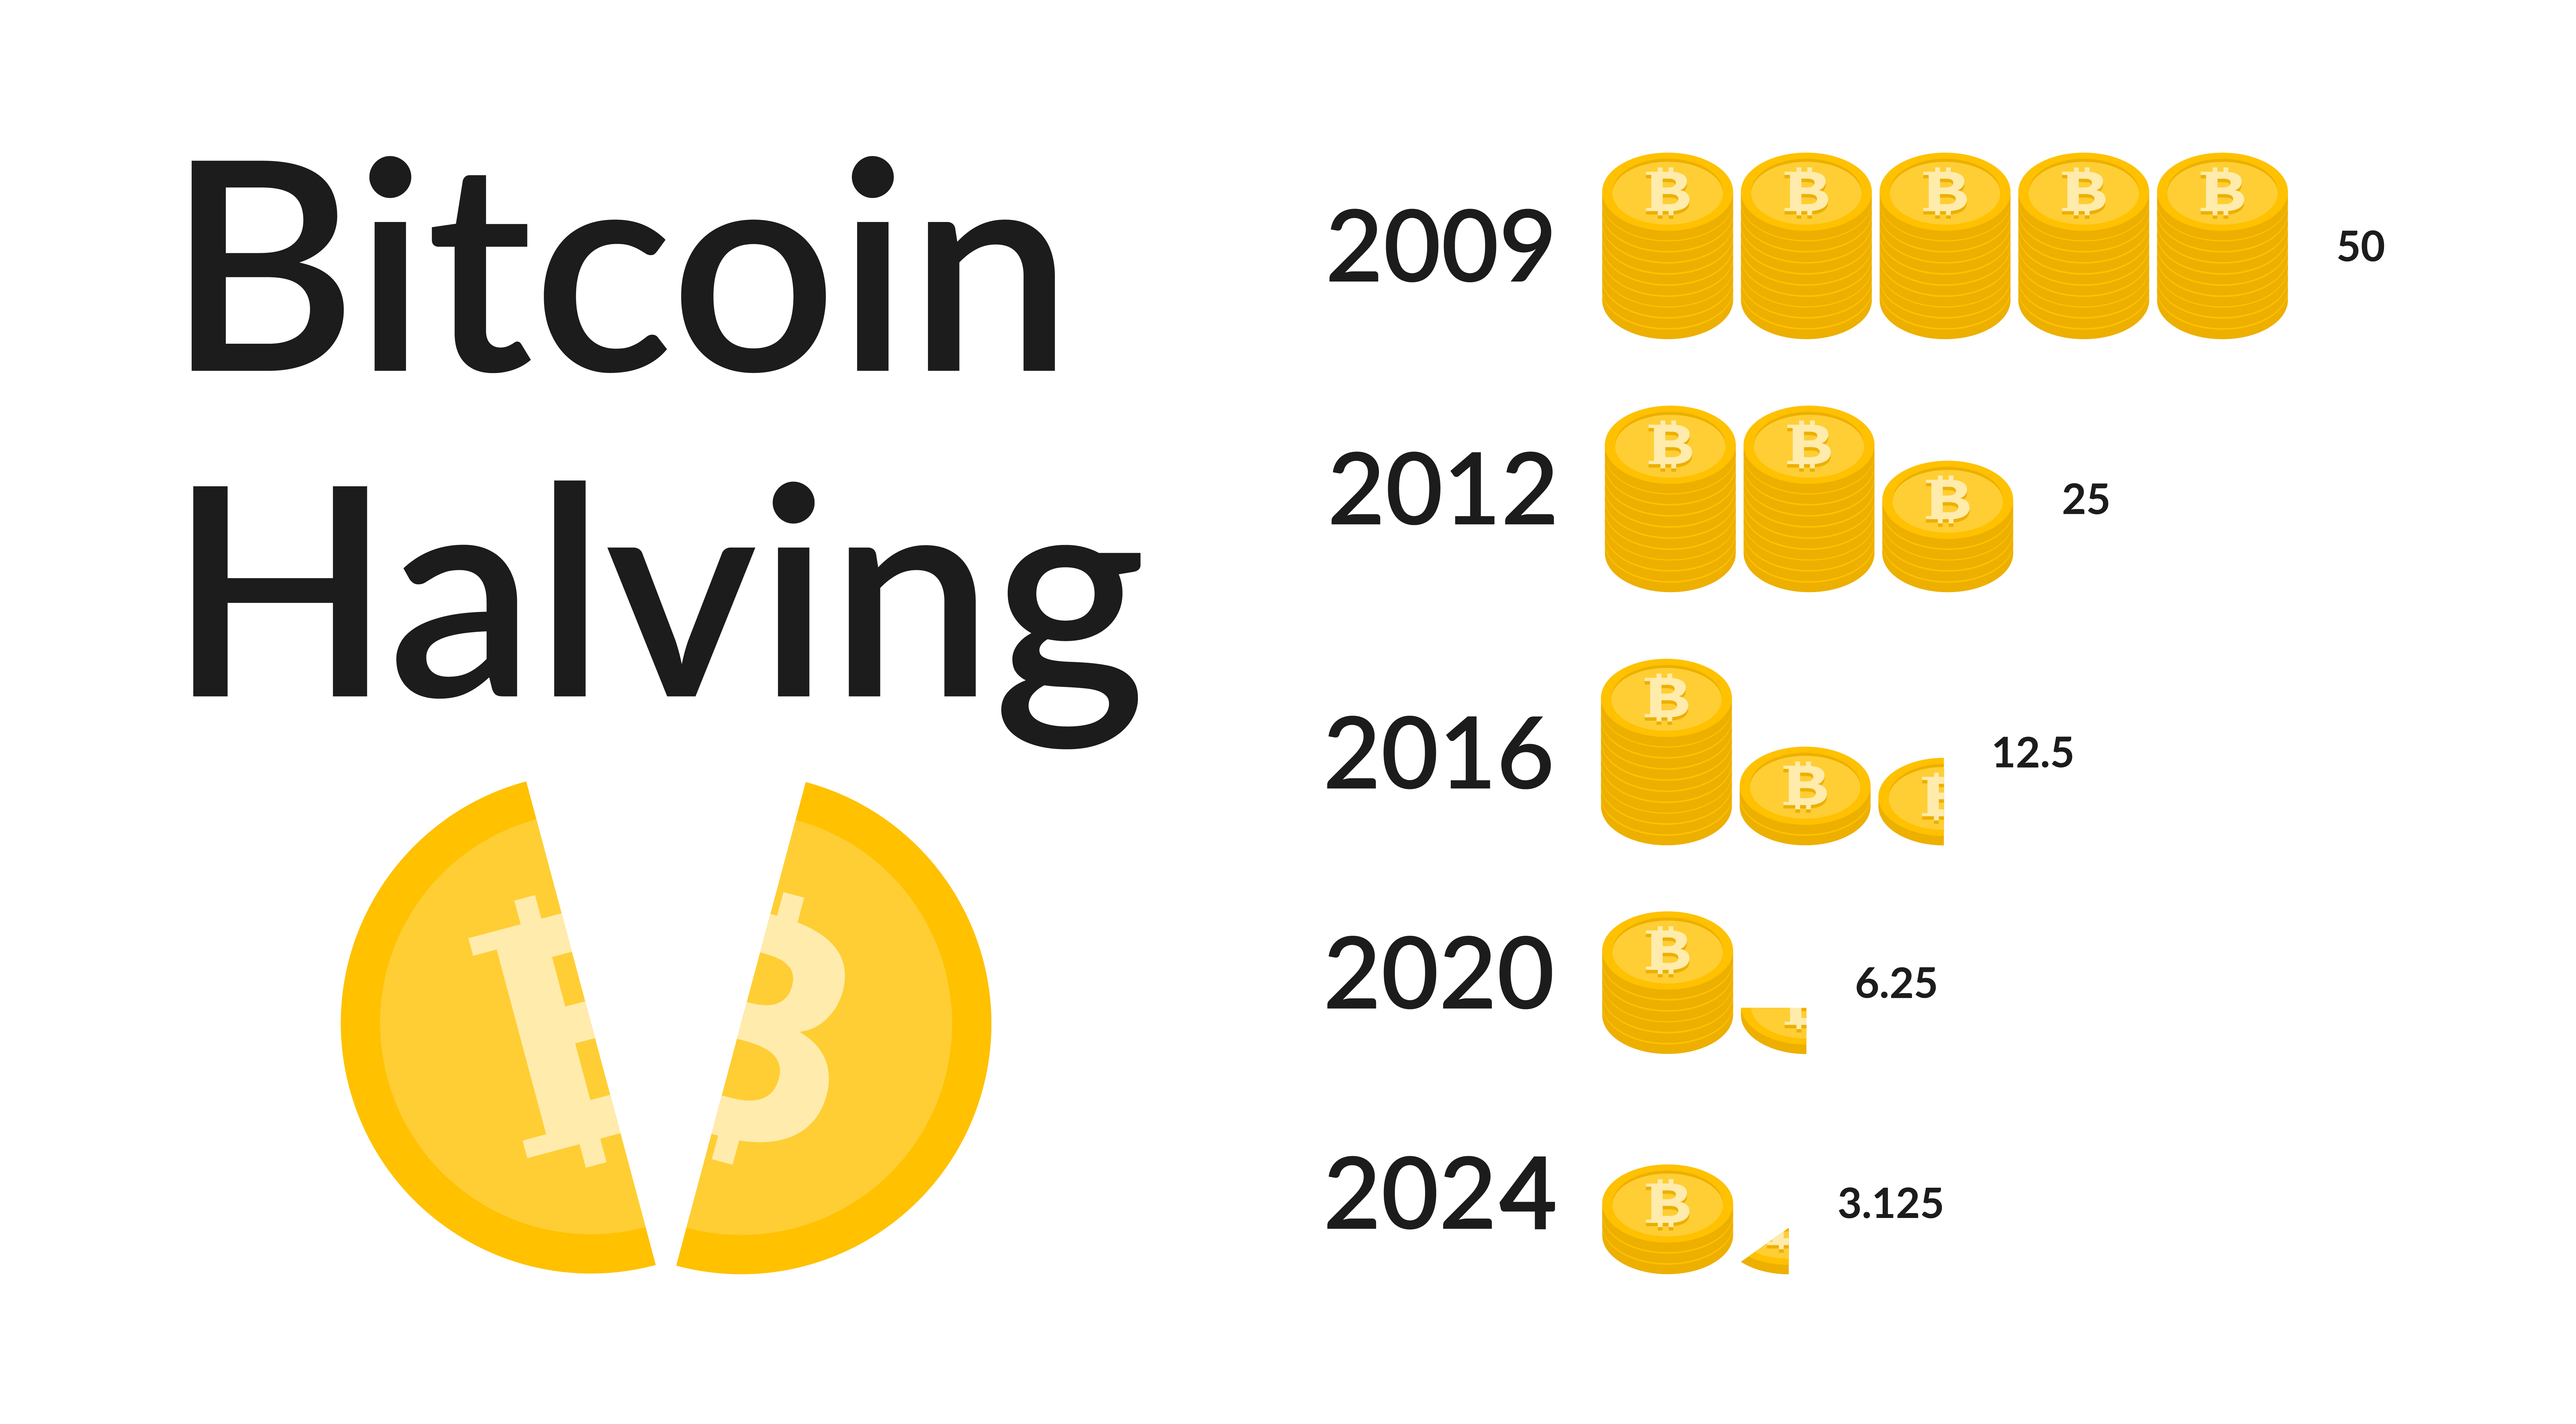 can we buy half bitcoin